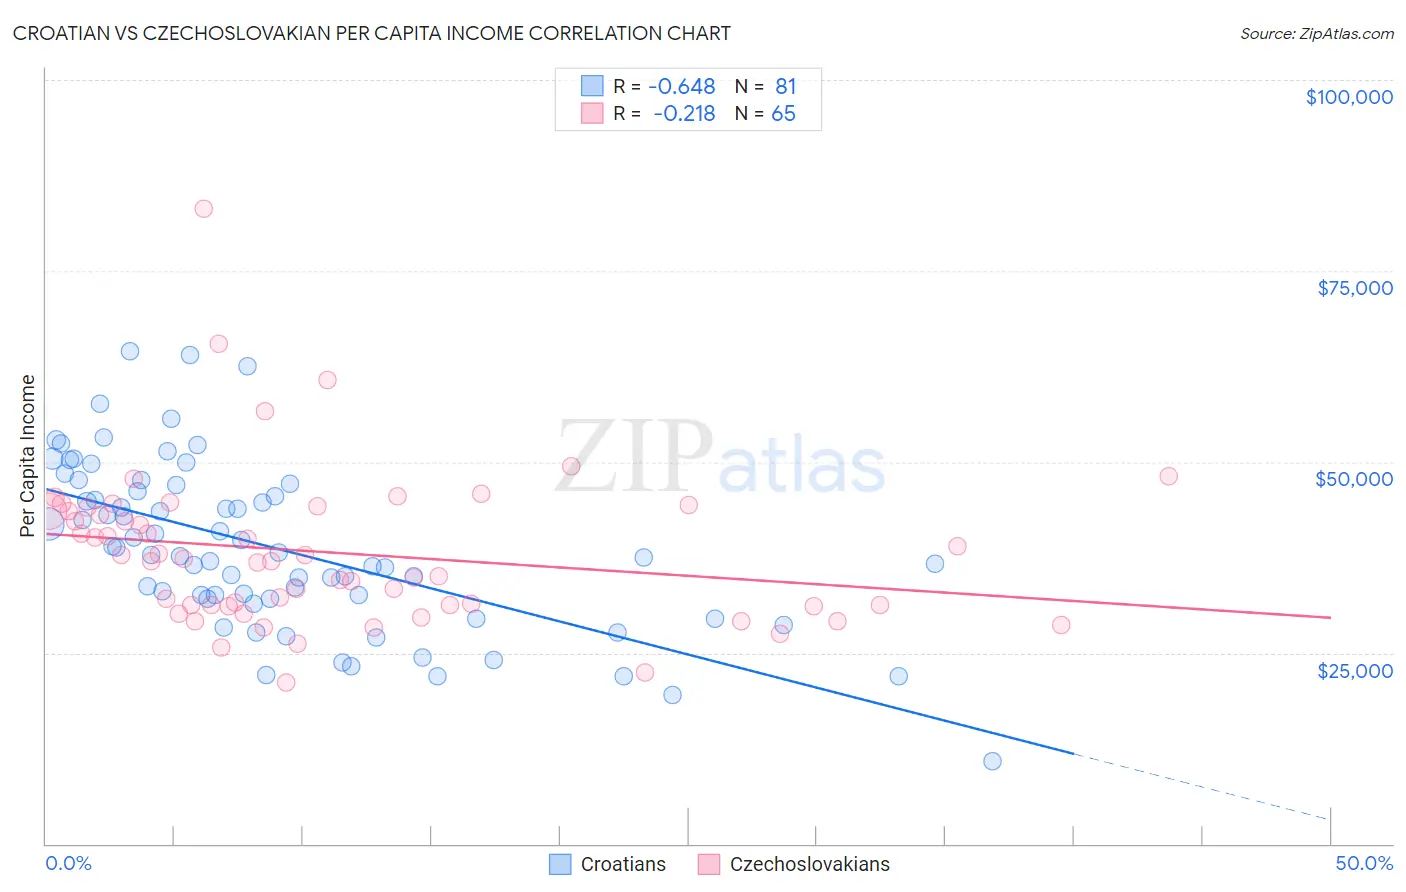 Croatian vs Czechoslovakian Per Capita Income